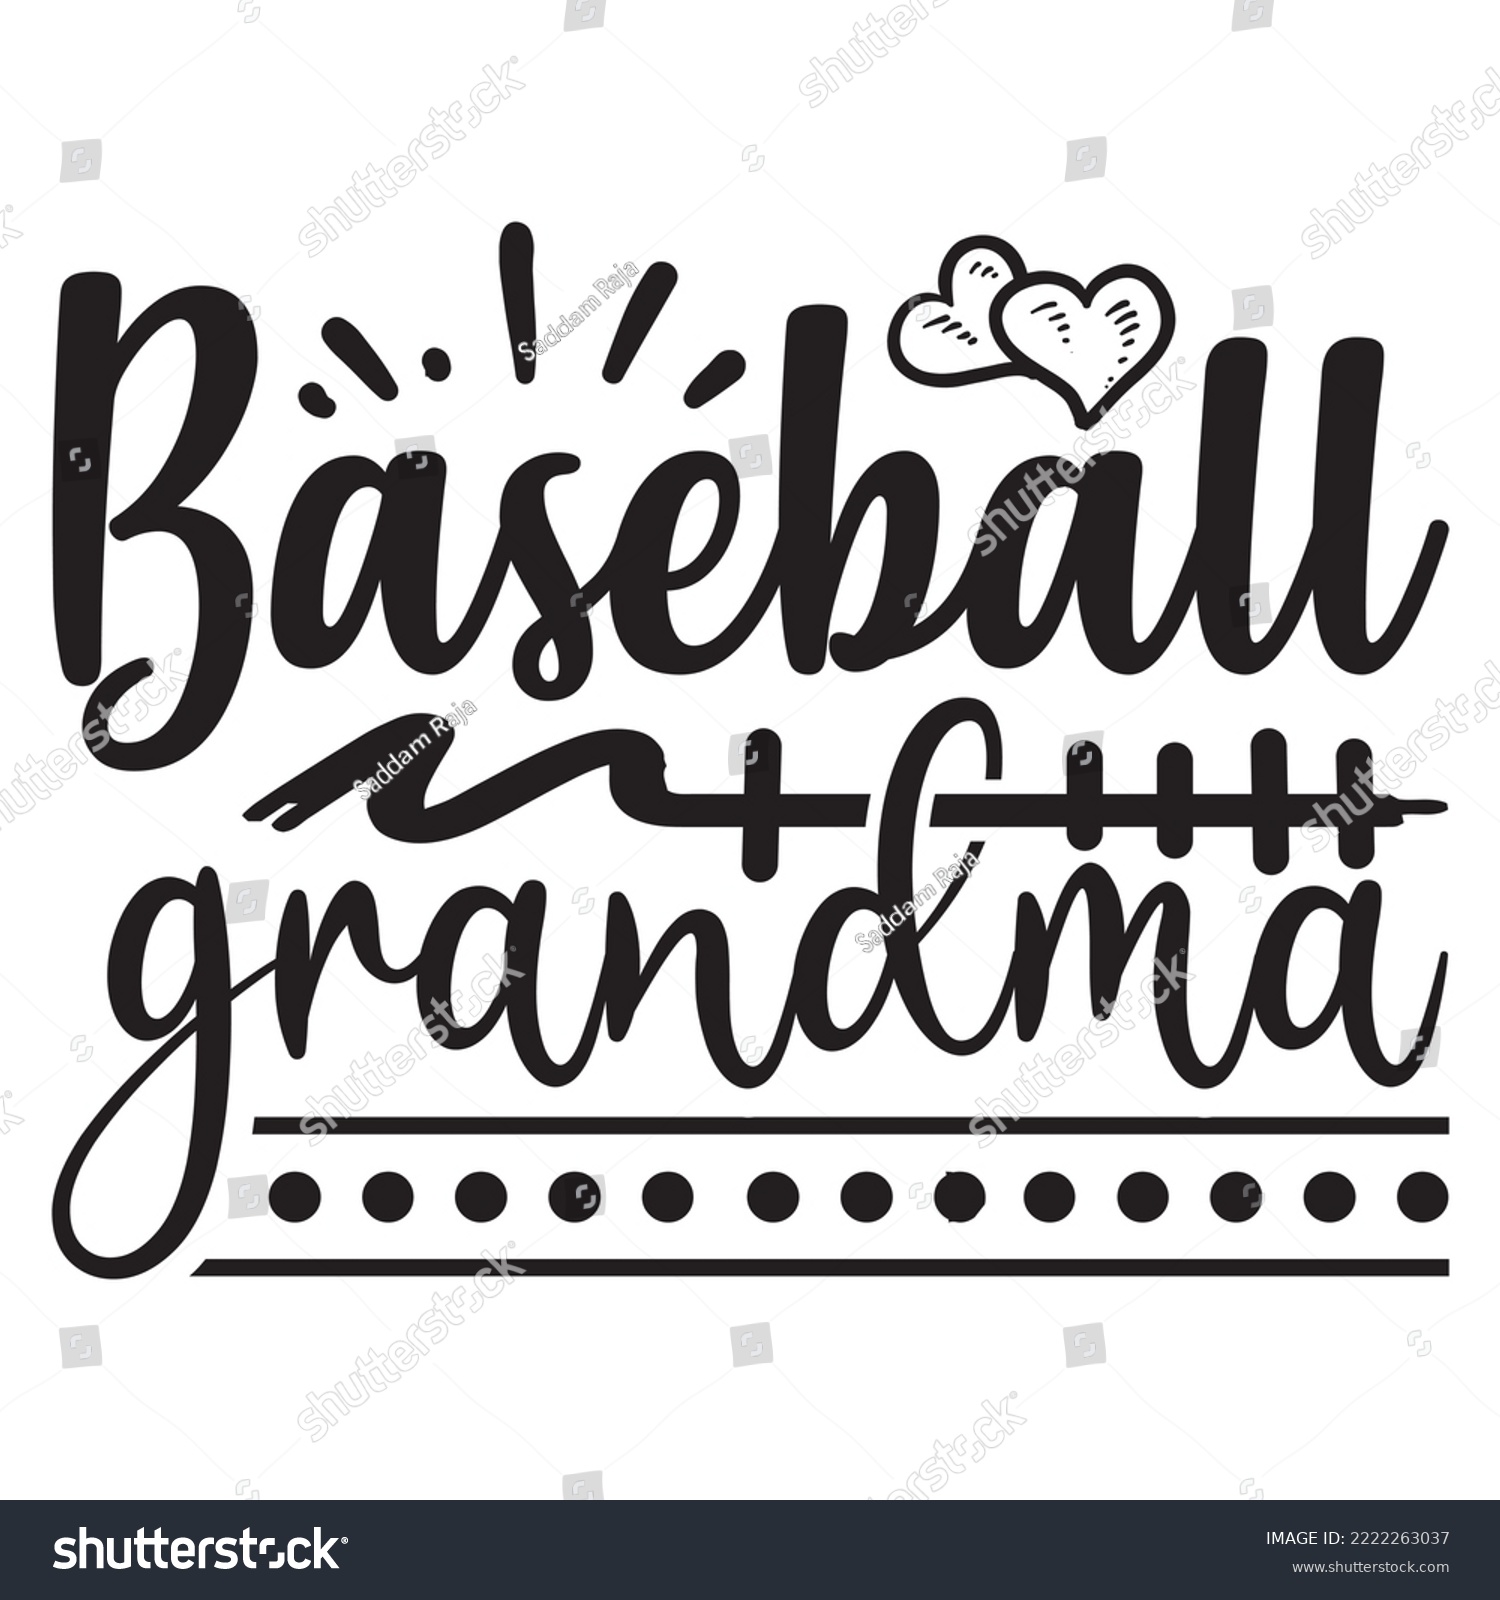 SVG of Baseball grandma. Good for t shirt print, poster, home decor, and gift design. svg